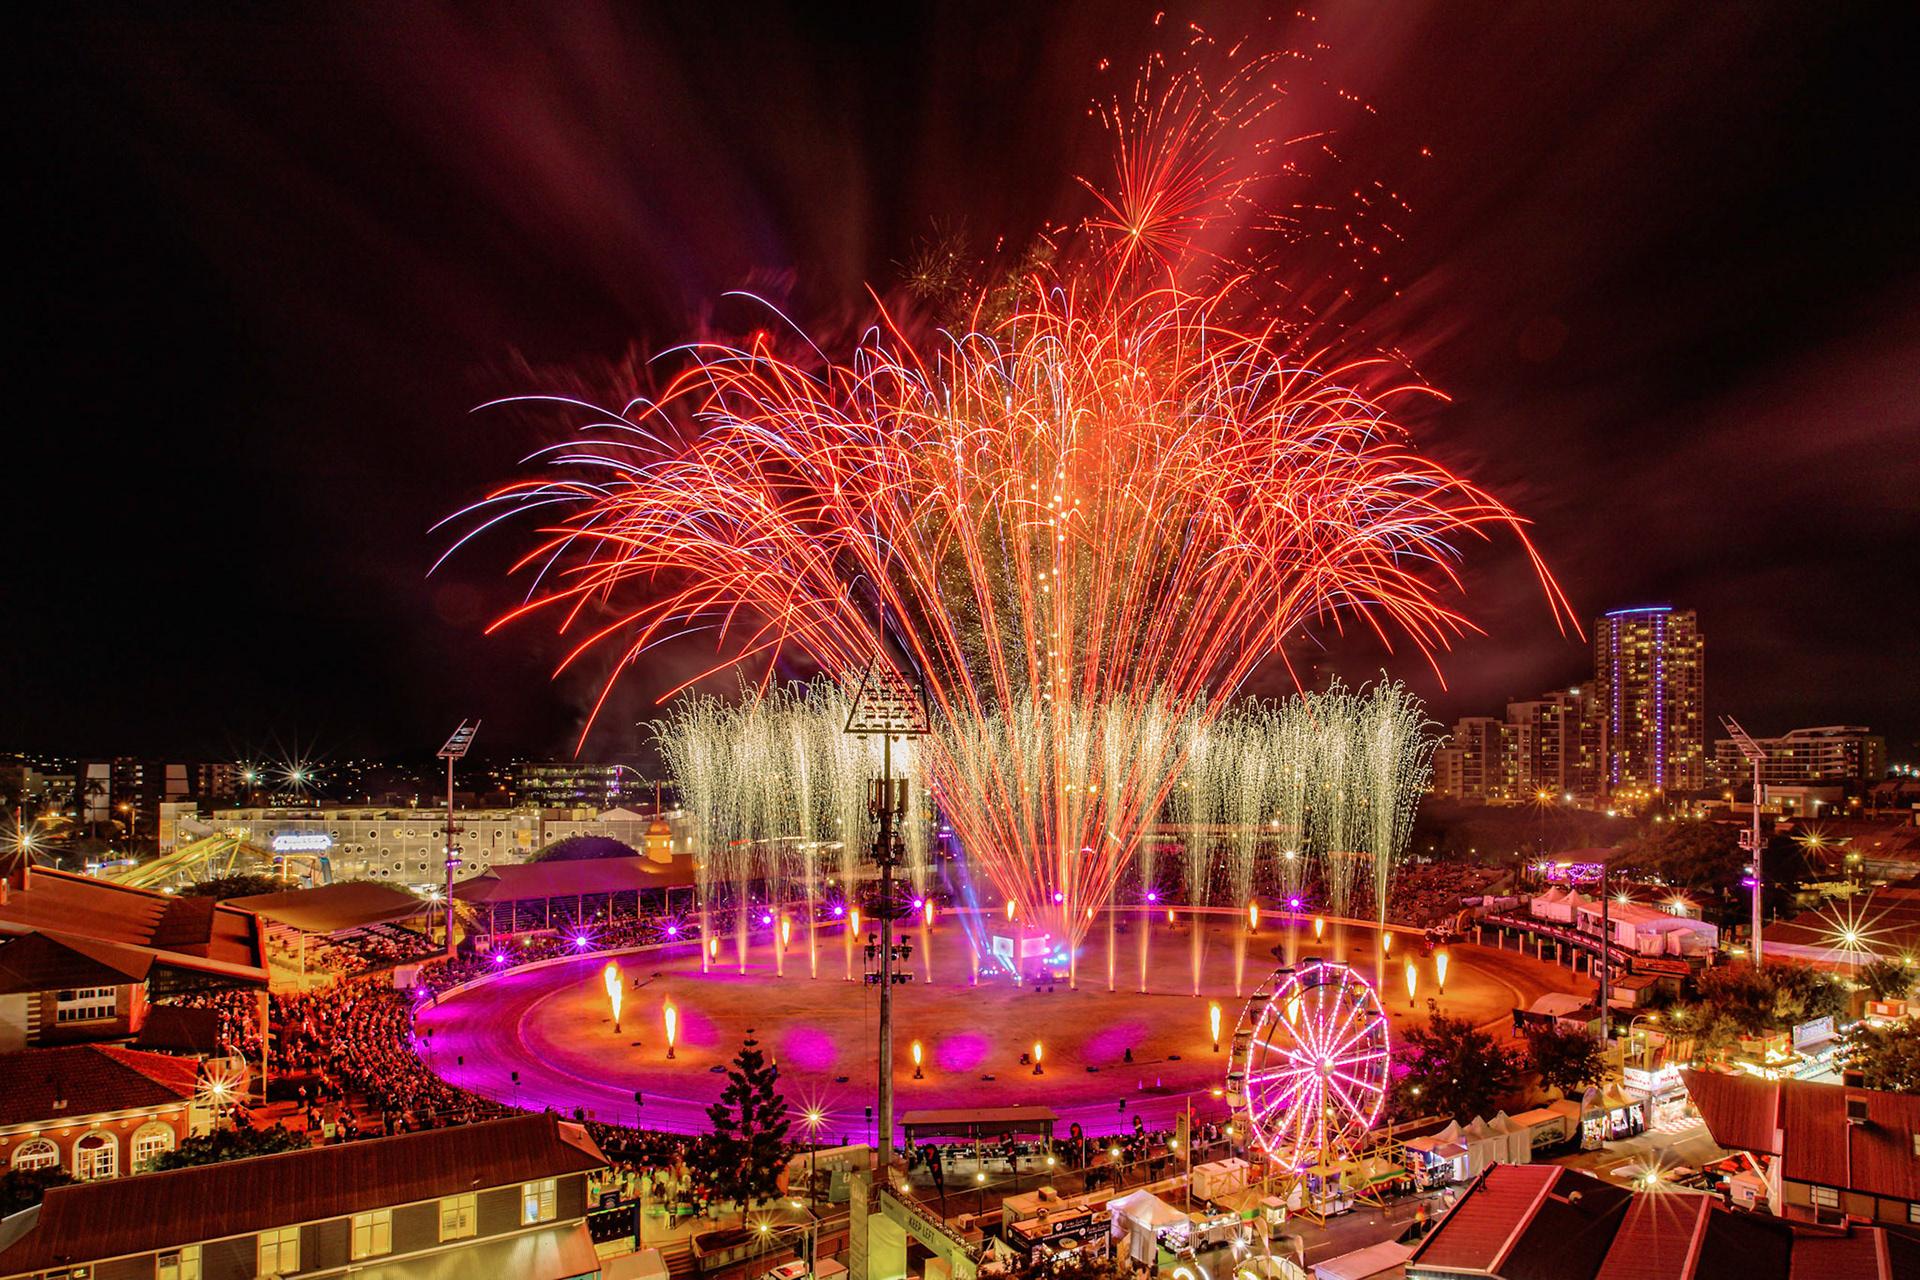 EKKA Show Brisbane – Howards Fireworks